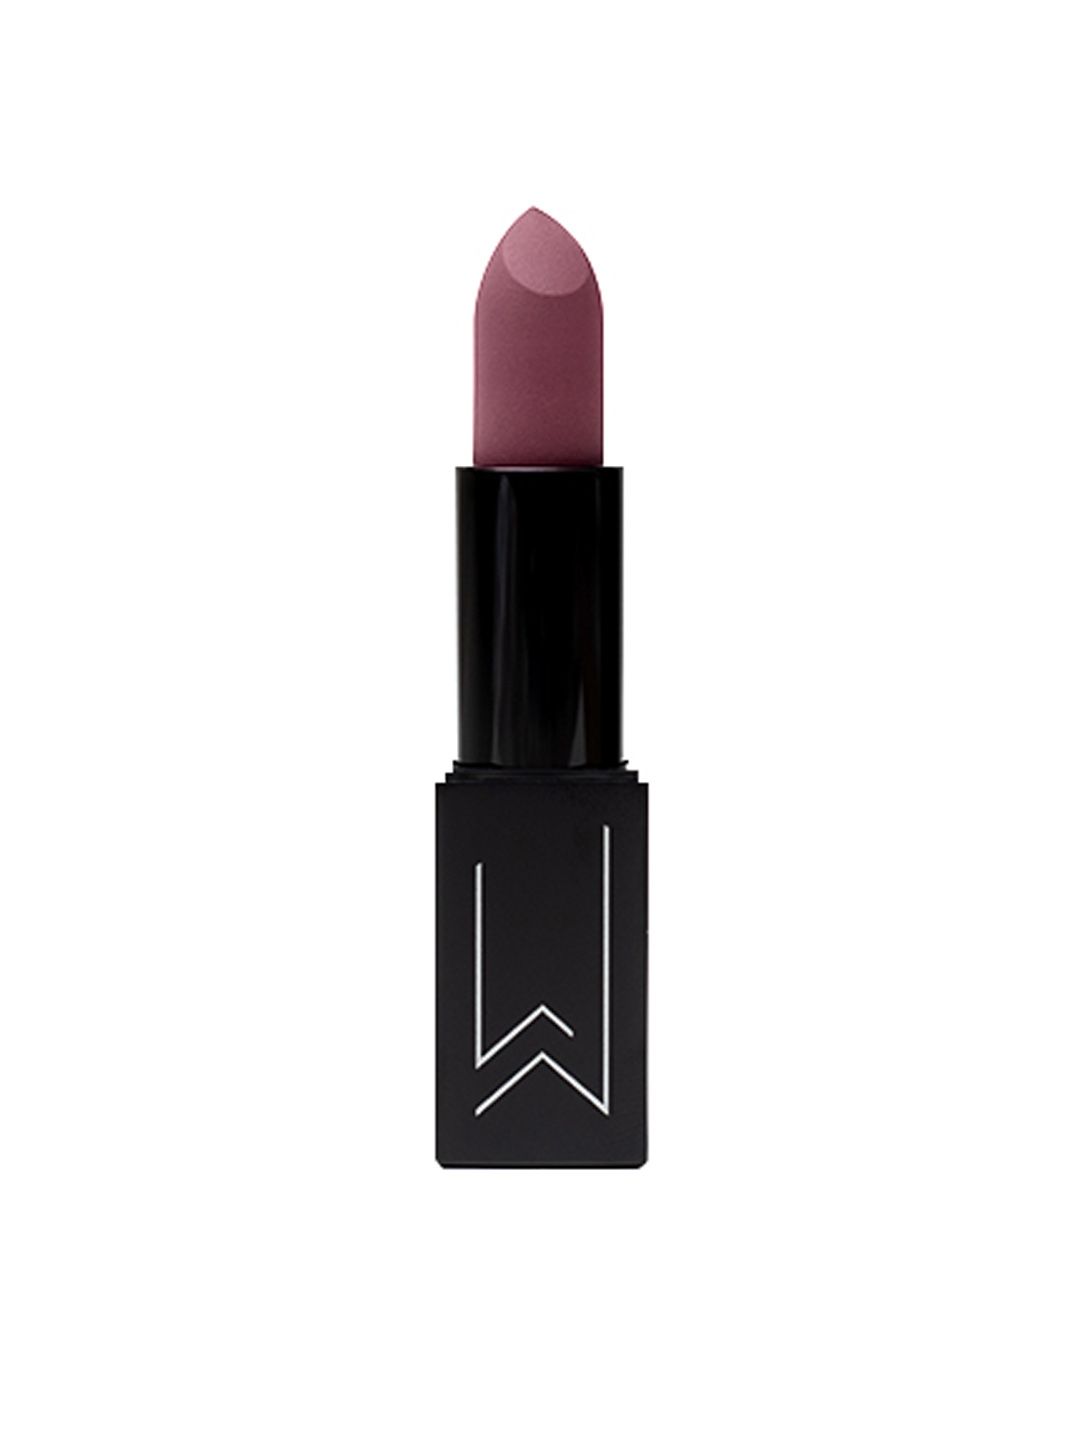 PAC Long Lasting Full Pigment Matte Mischief Lipstick - Wineberry 08 Price in India